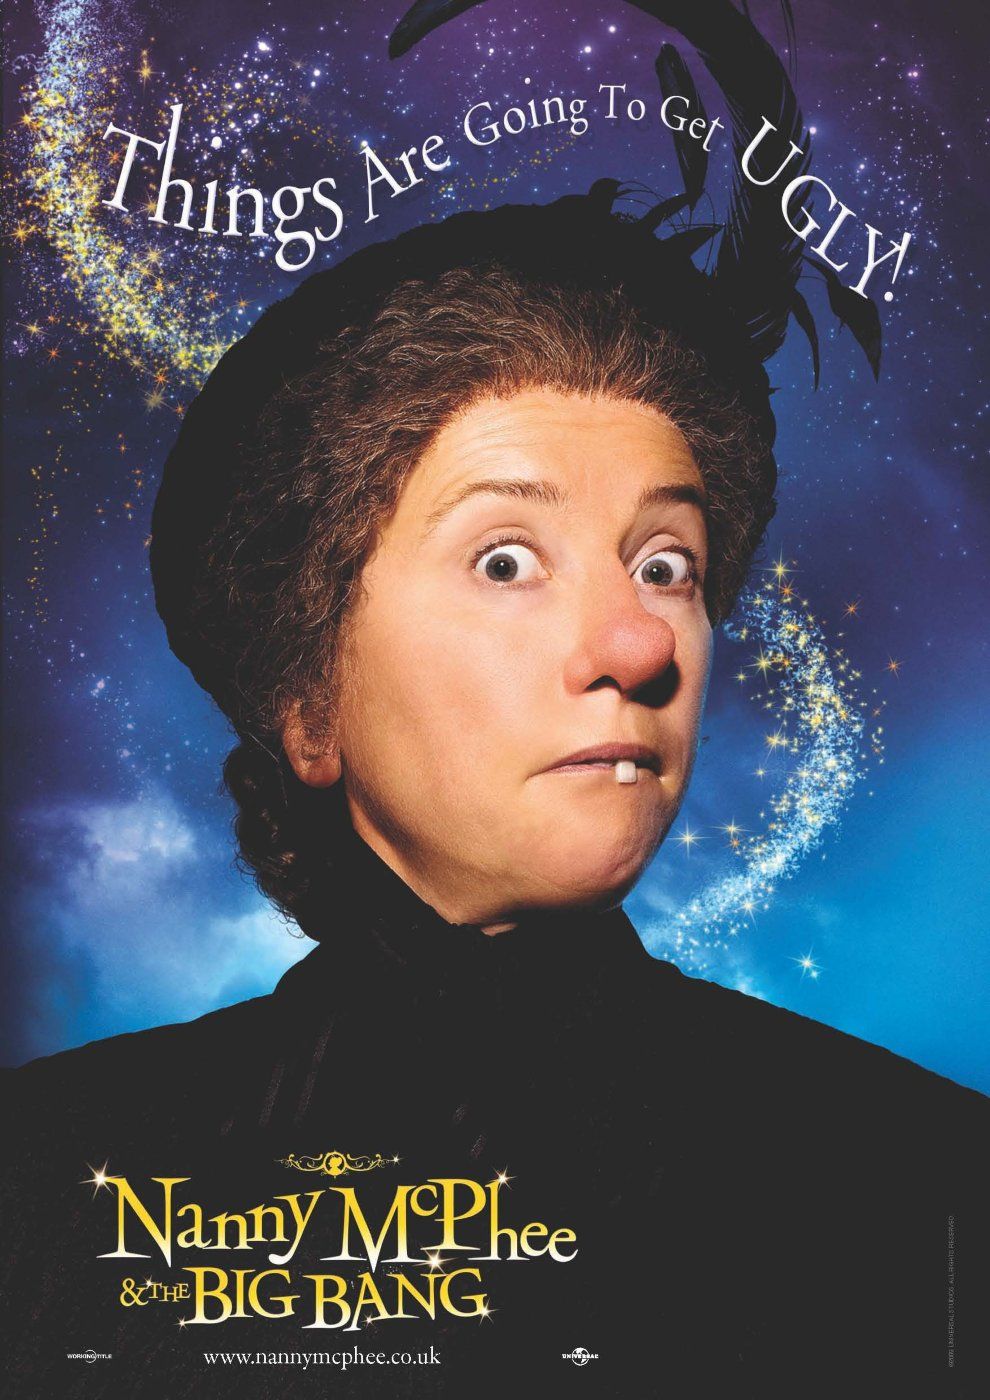 Nanny McPhee and the Big Bang: Extra Large Movie Poster Image.